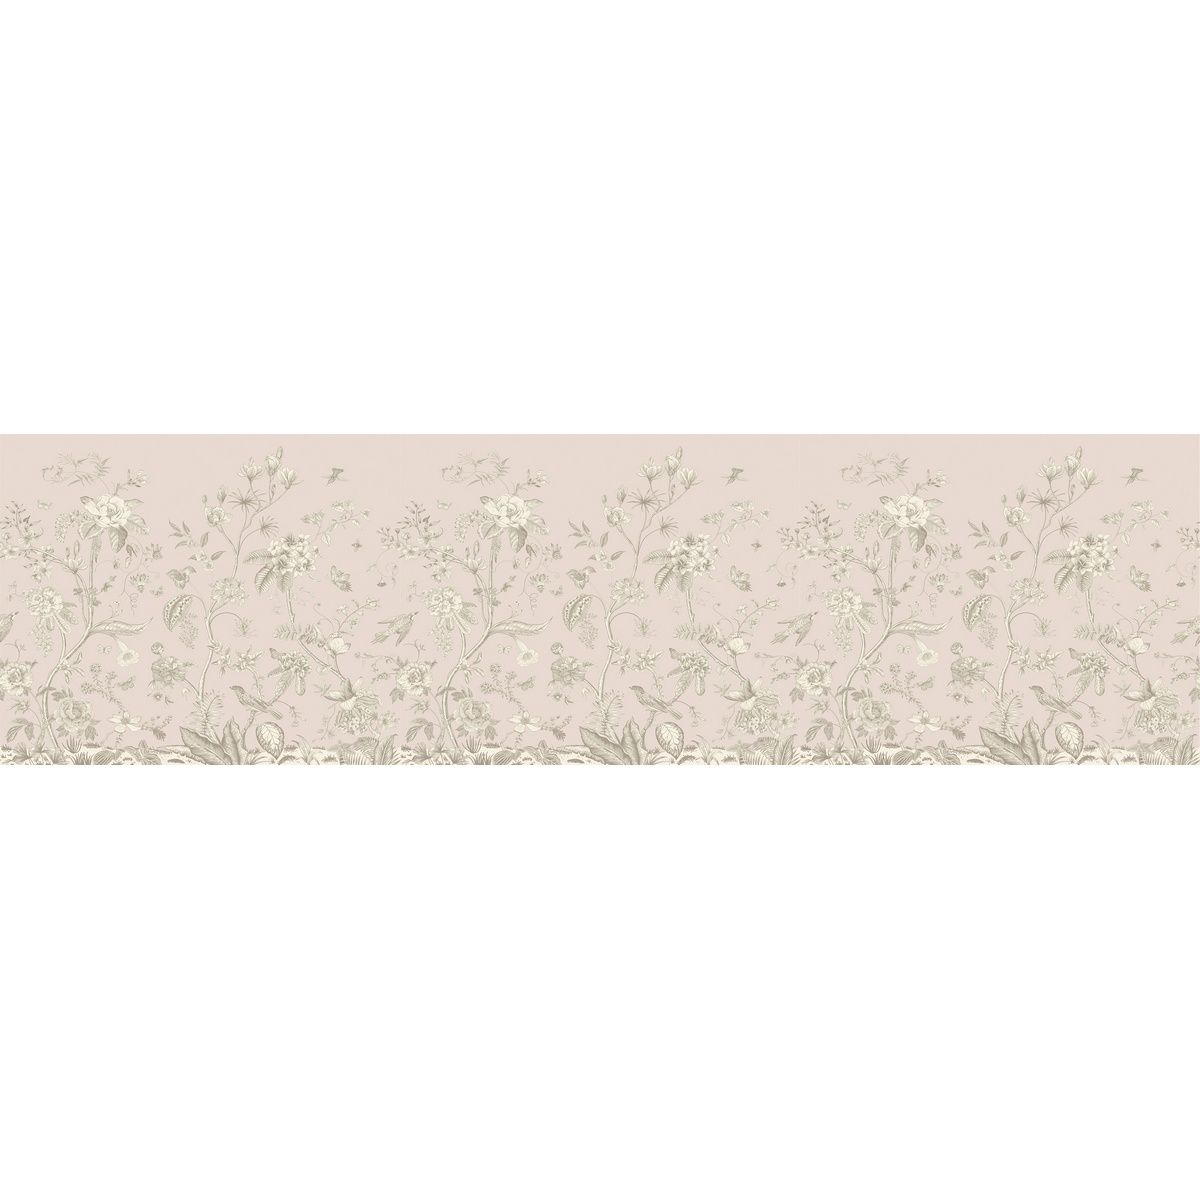 Samolepicí bordura Old graphic florals, 500 x 13,8 cm  - 4home.cz